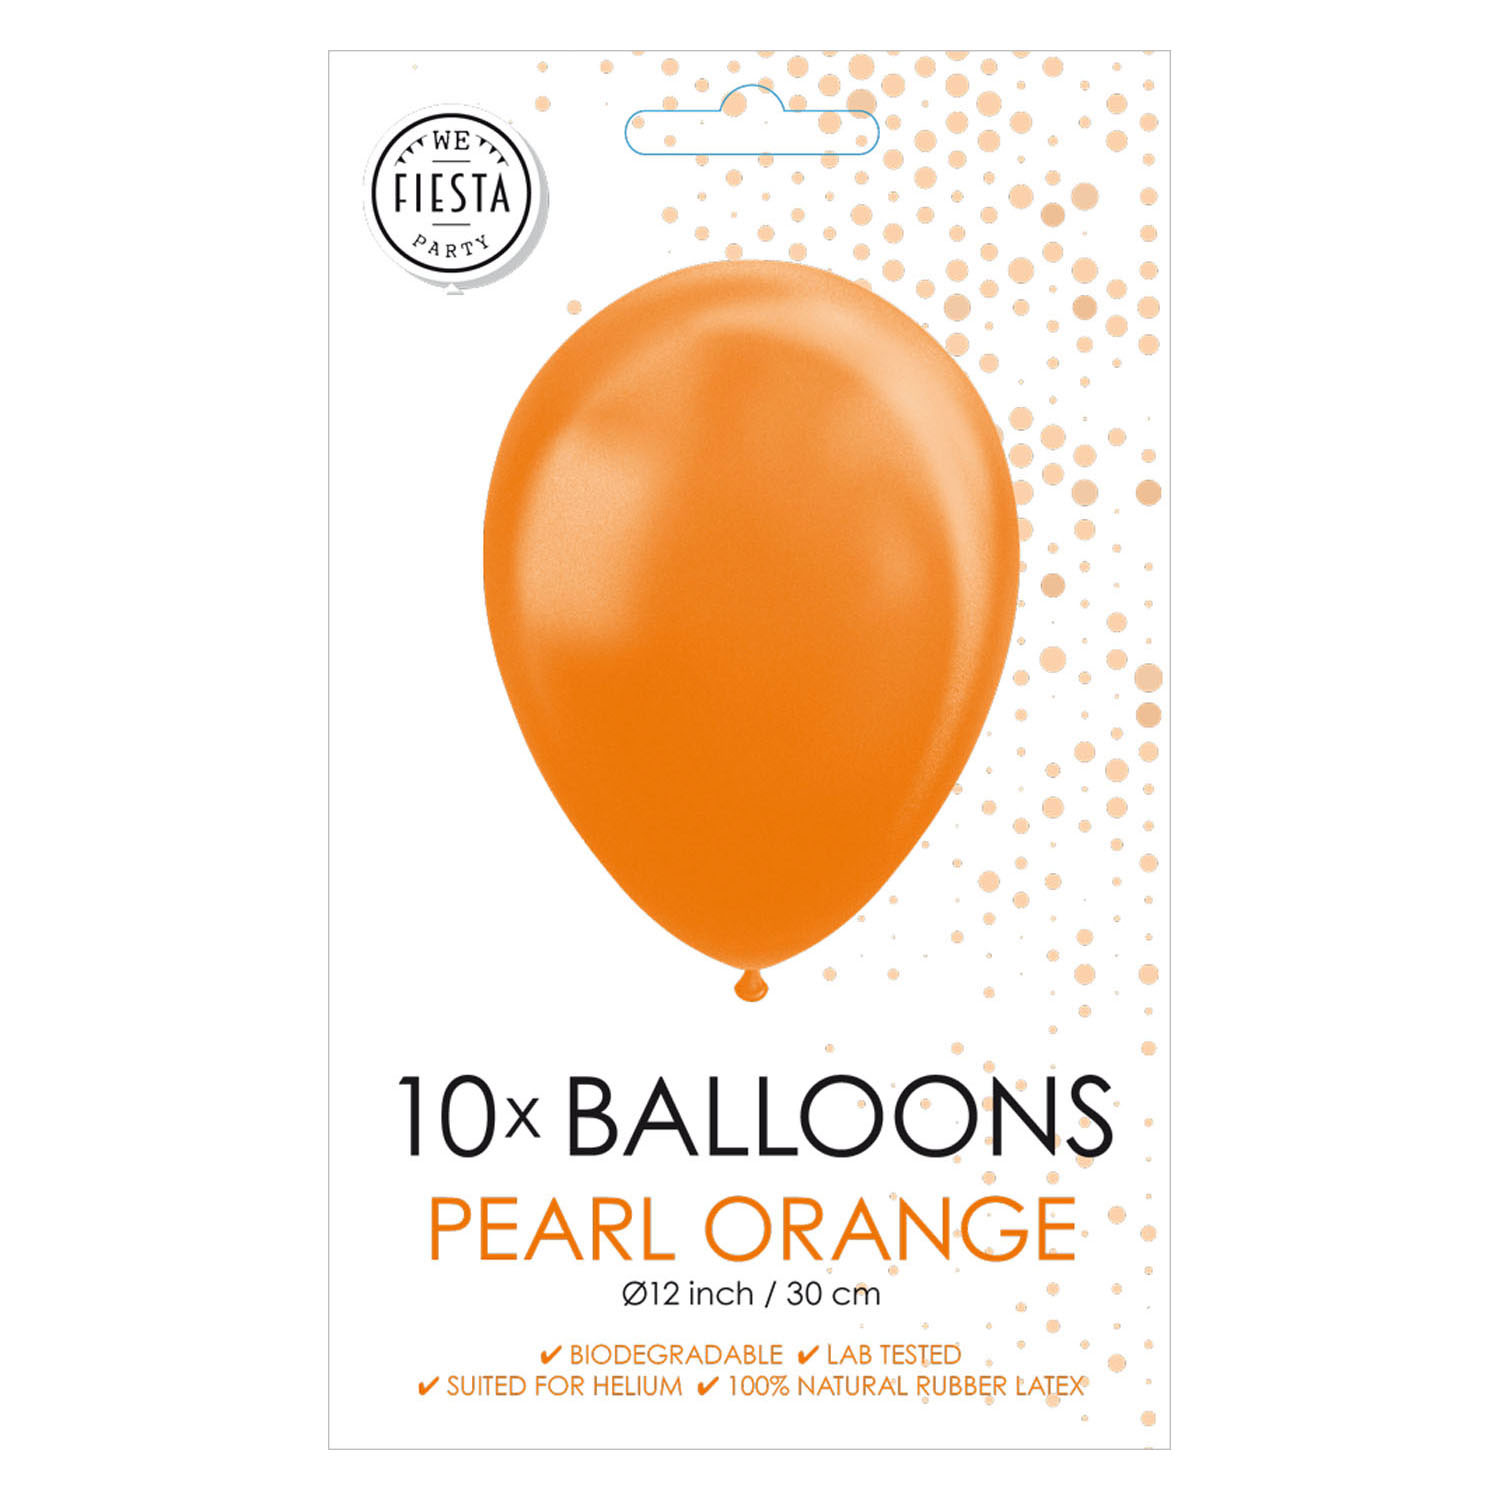 Ballons de baudruche orange en latex biodégradable